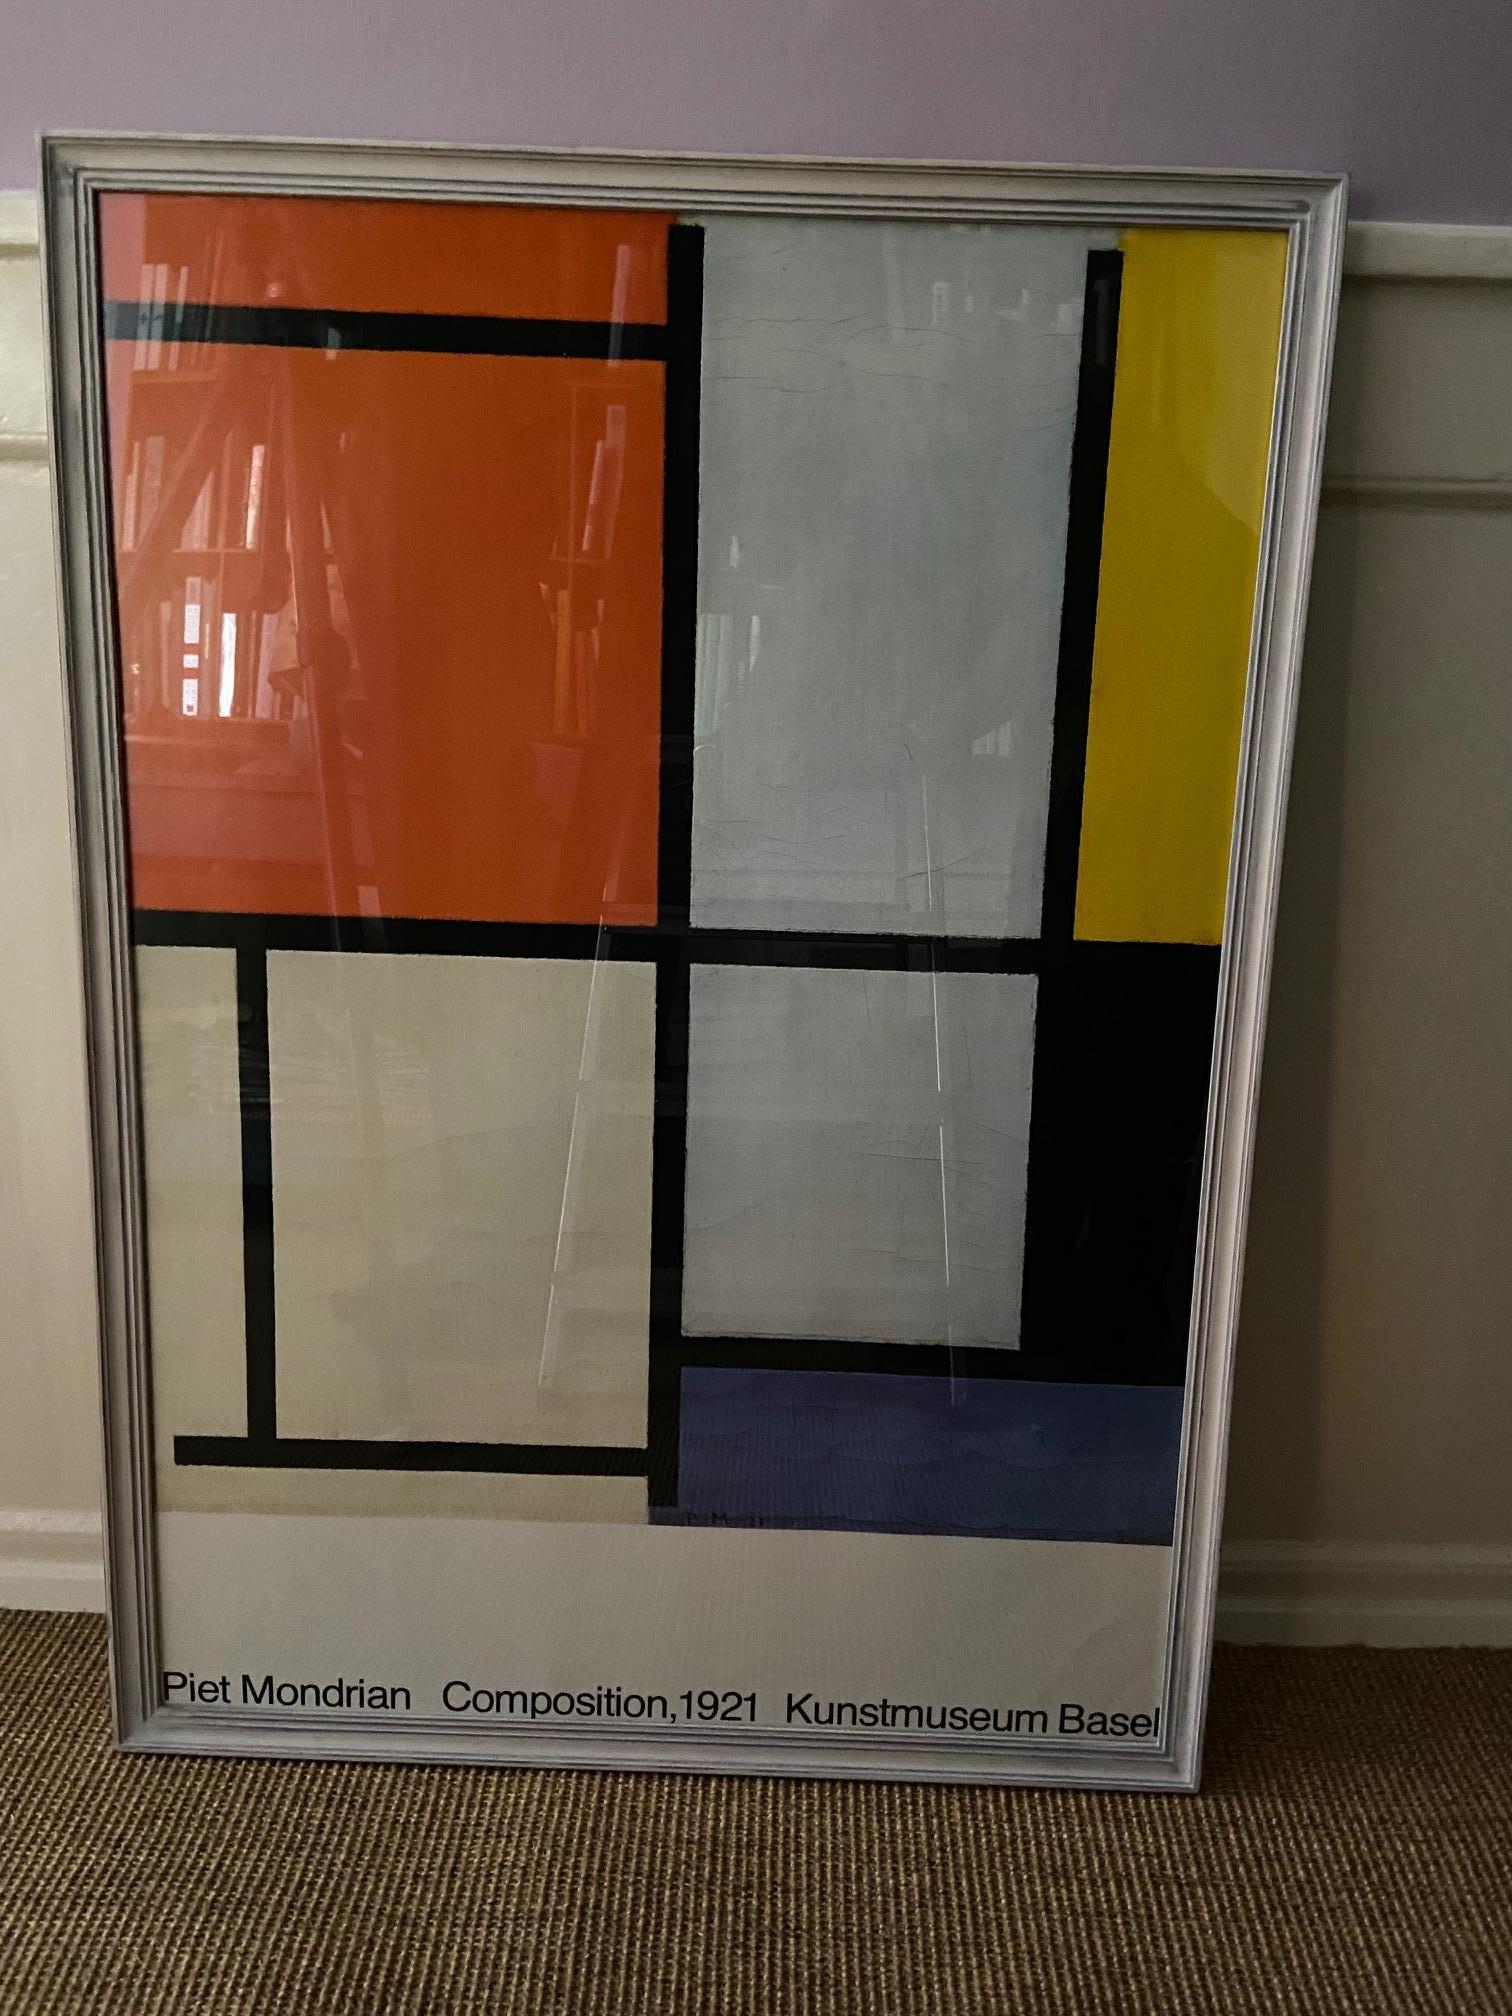 Swiss Vintage Piet Mondrian Kunstmuseum Basel Exhibition Poster, Switzerland, 1986